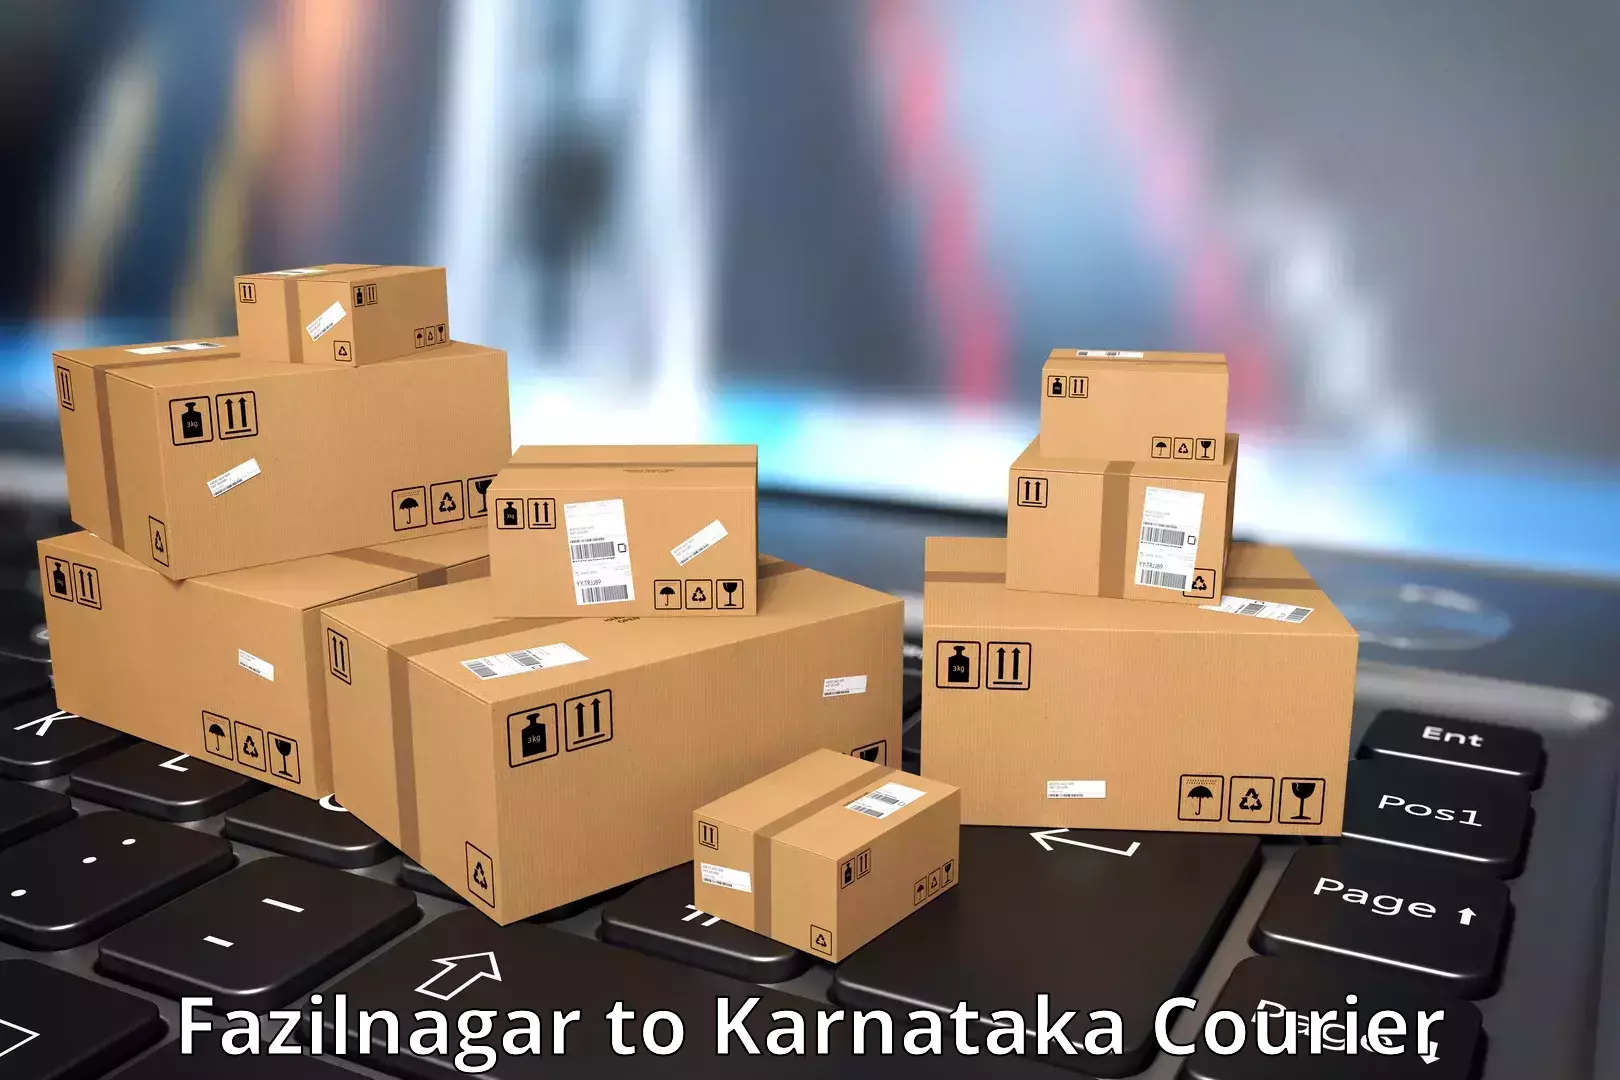 Round-the-clock parcel delivery Fazilnagar to Yenepoya Mangalore